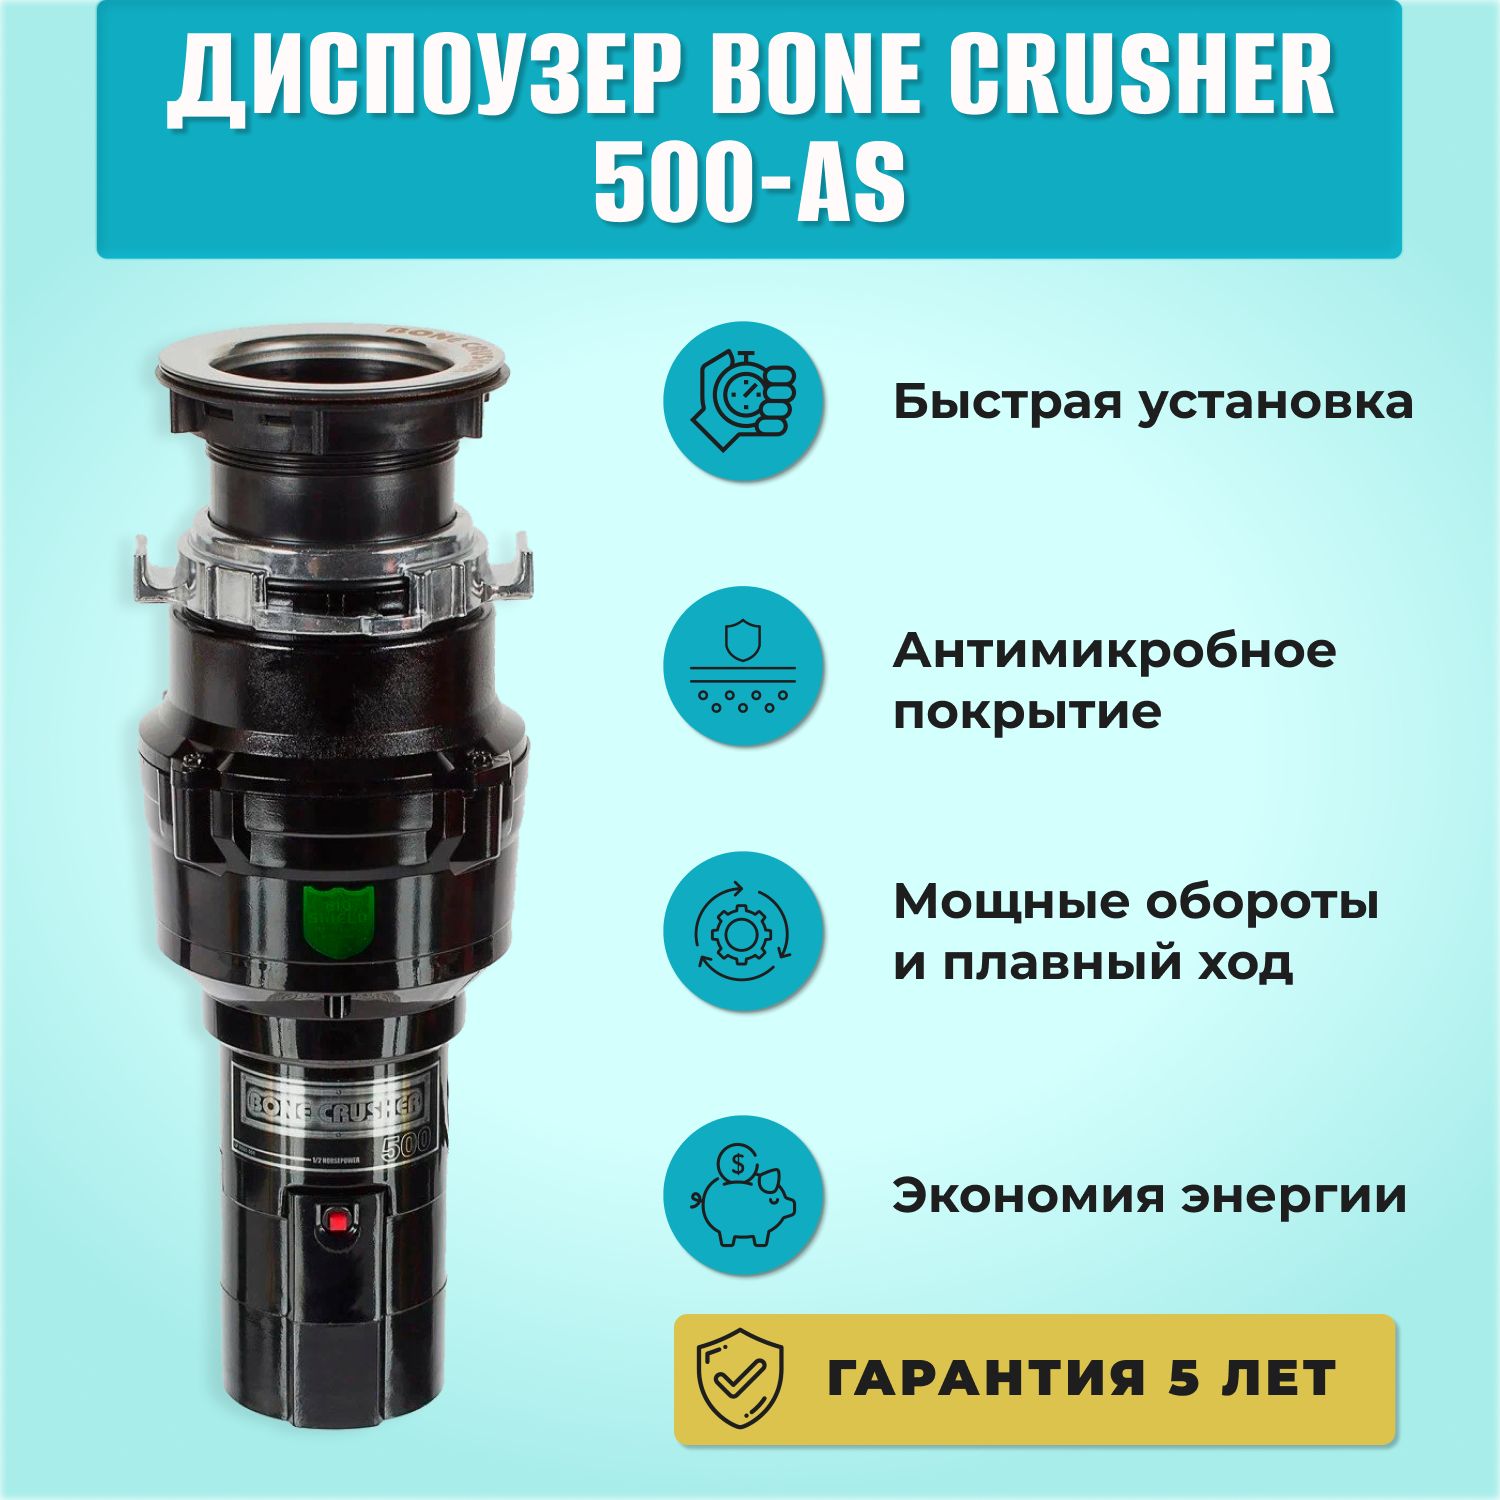 Bone crusher: модель BC 500. Bone crusher bc500-as измельчитель пищевых отходов. Bone crusher BC 900. Резинка в раковину bon Rusher. Раковина для bone crusher